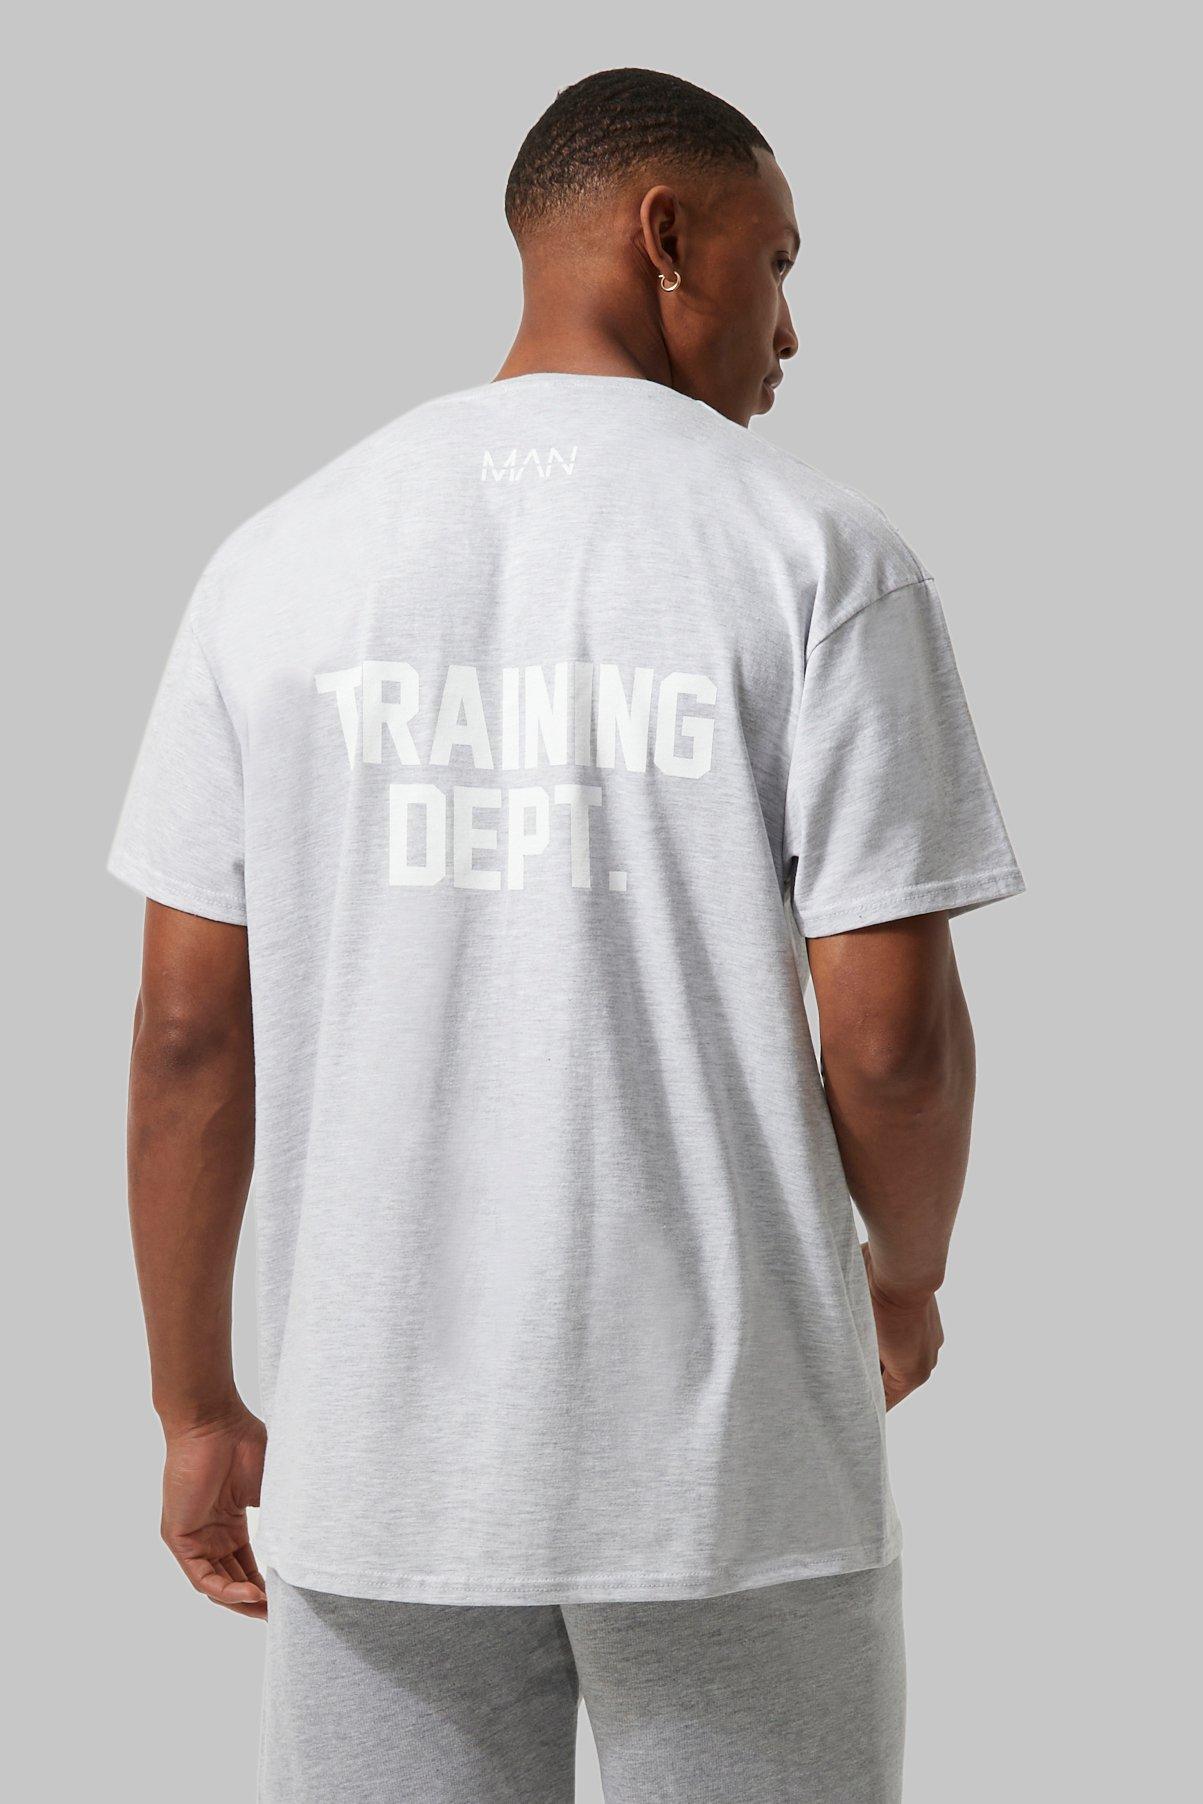 Mens Grey Man Active Training Dept Oversized T-shirt, Grey